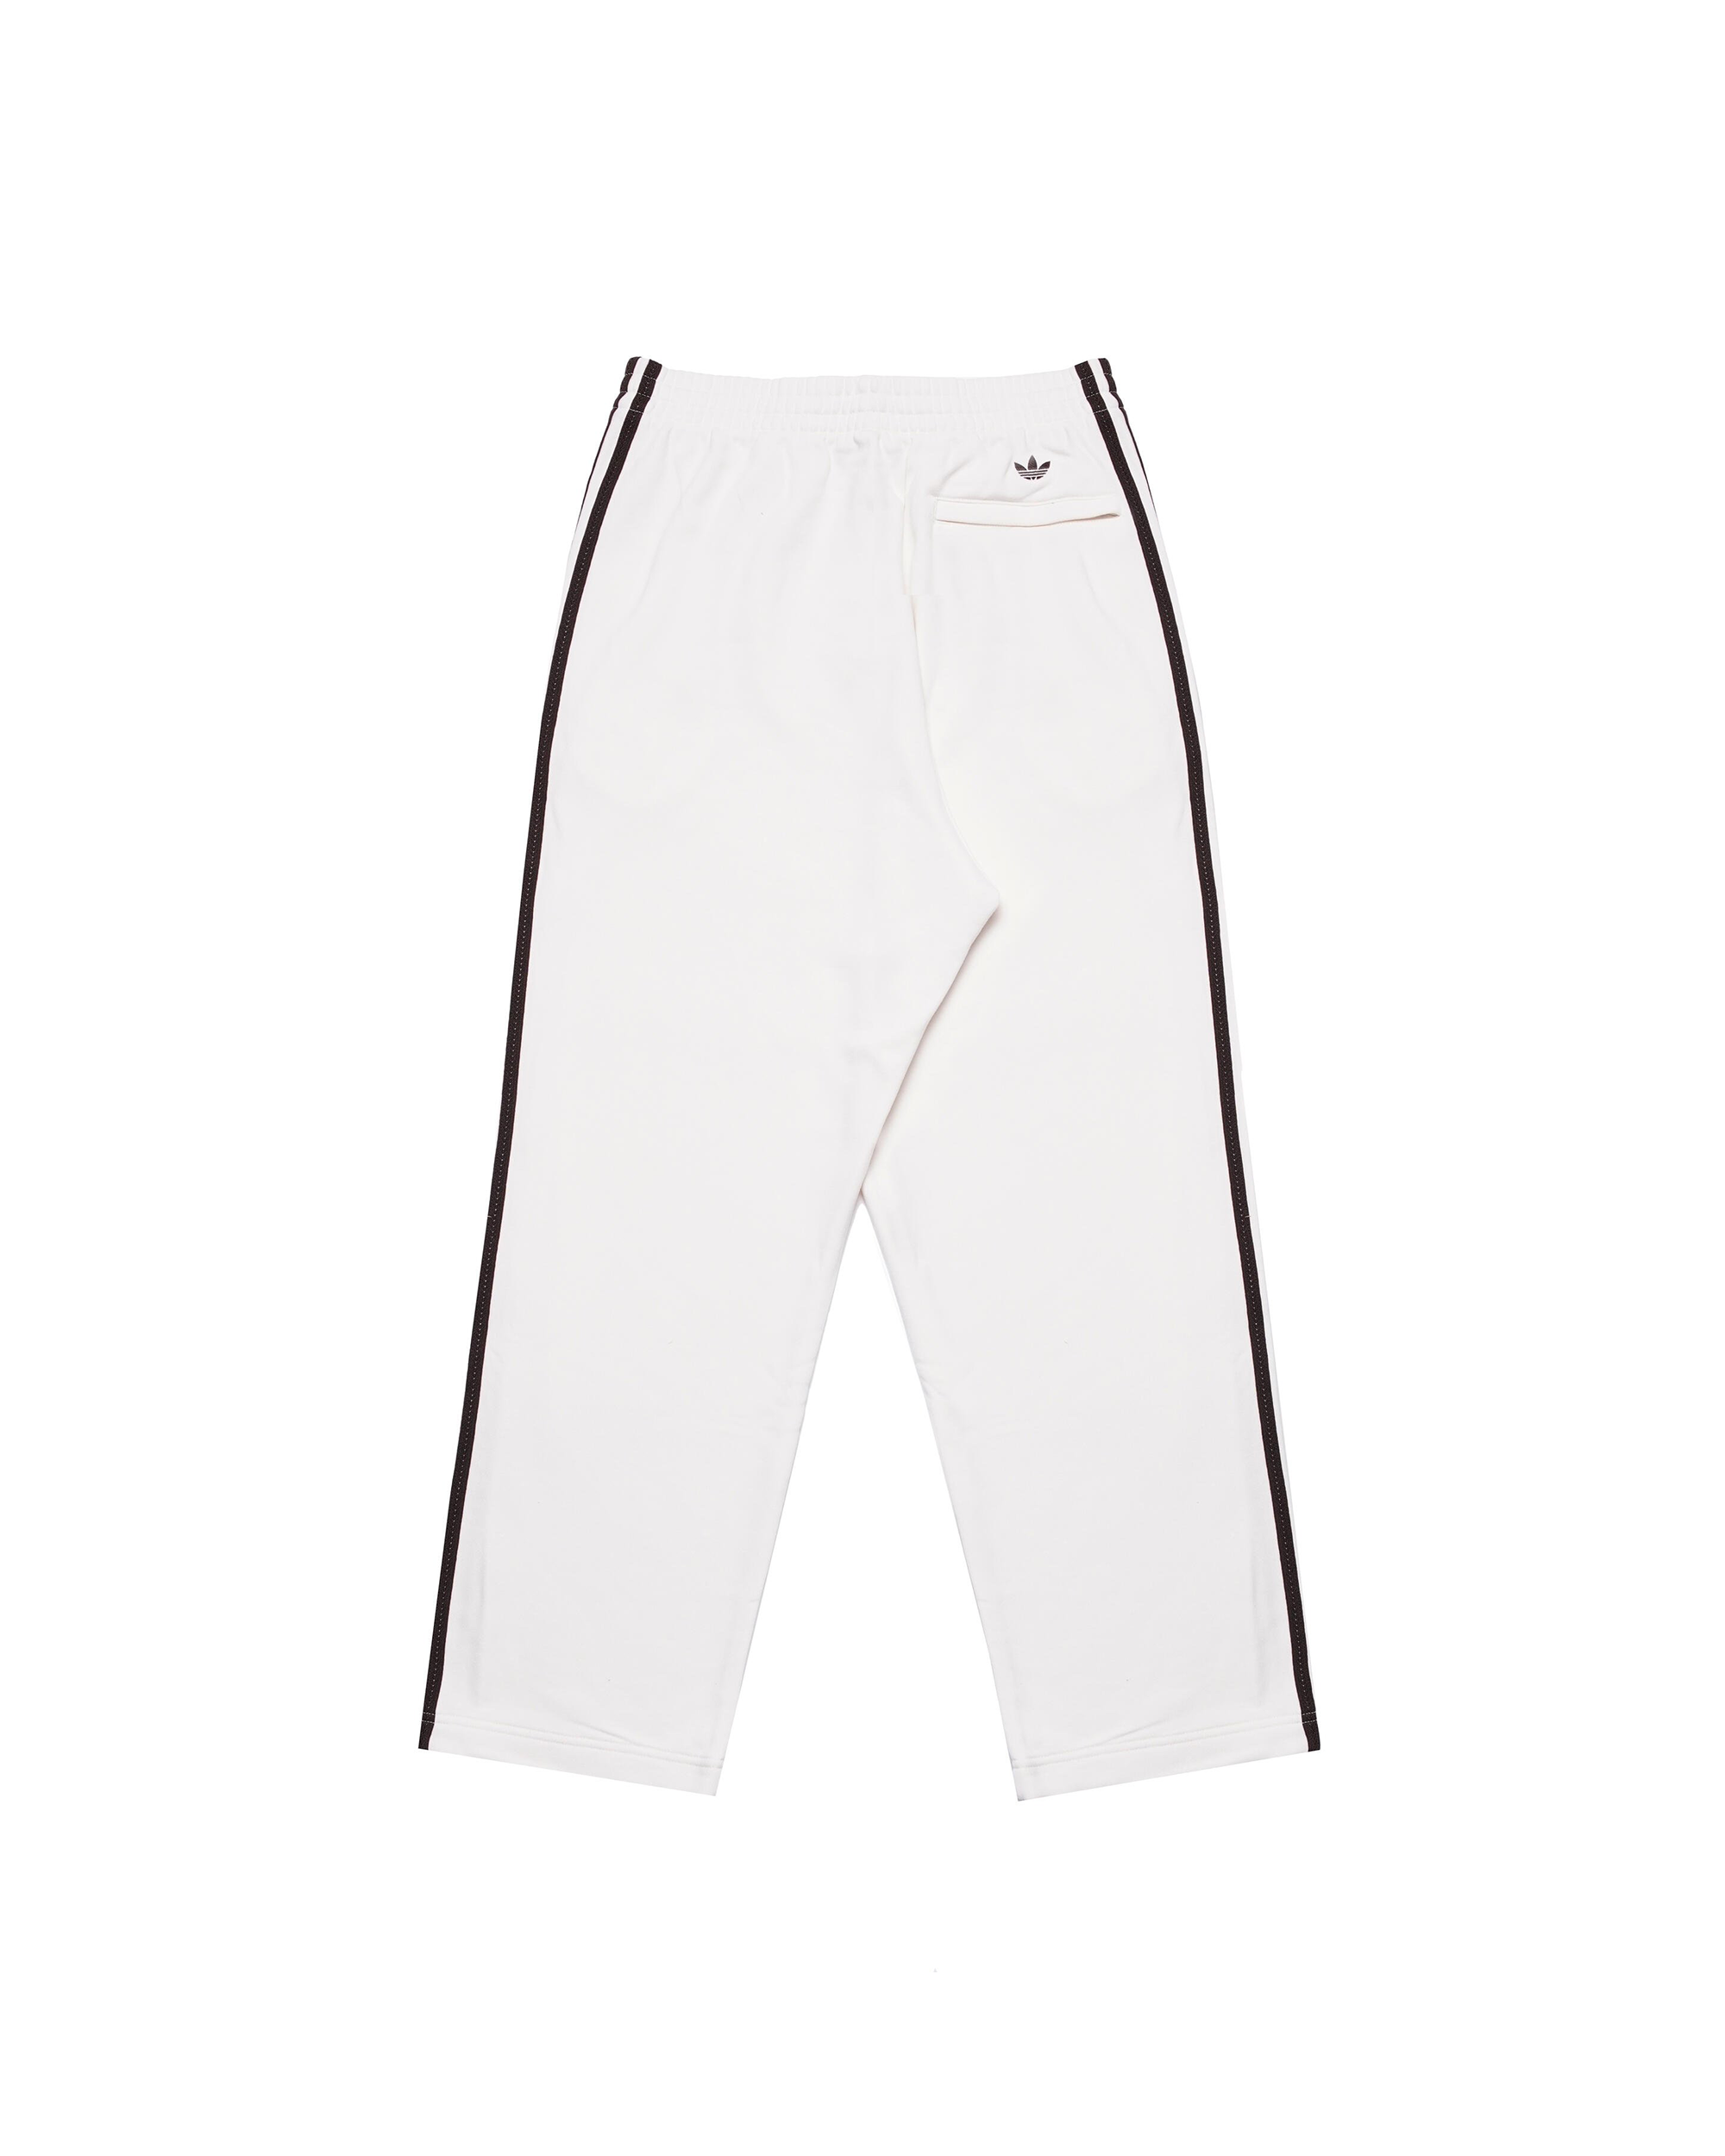 Wales Bonner Track Pants - Cream White